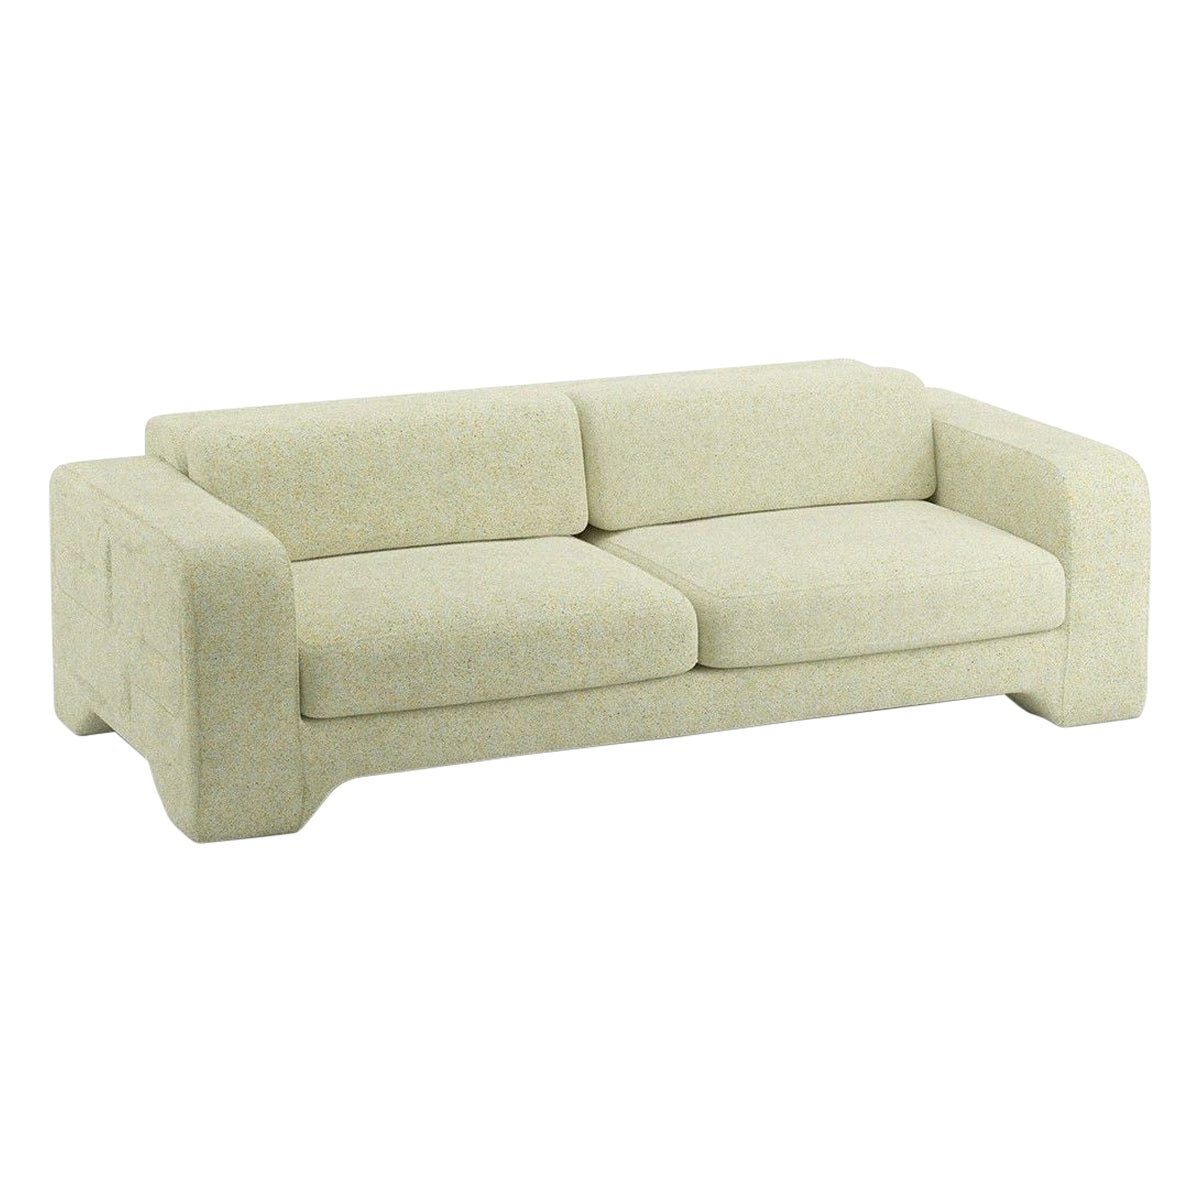 Popus Editions Giovanna 4 Seater Sofa in Sage Zanzi Linen & Wool Blend Fabric